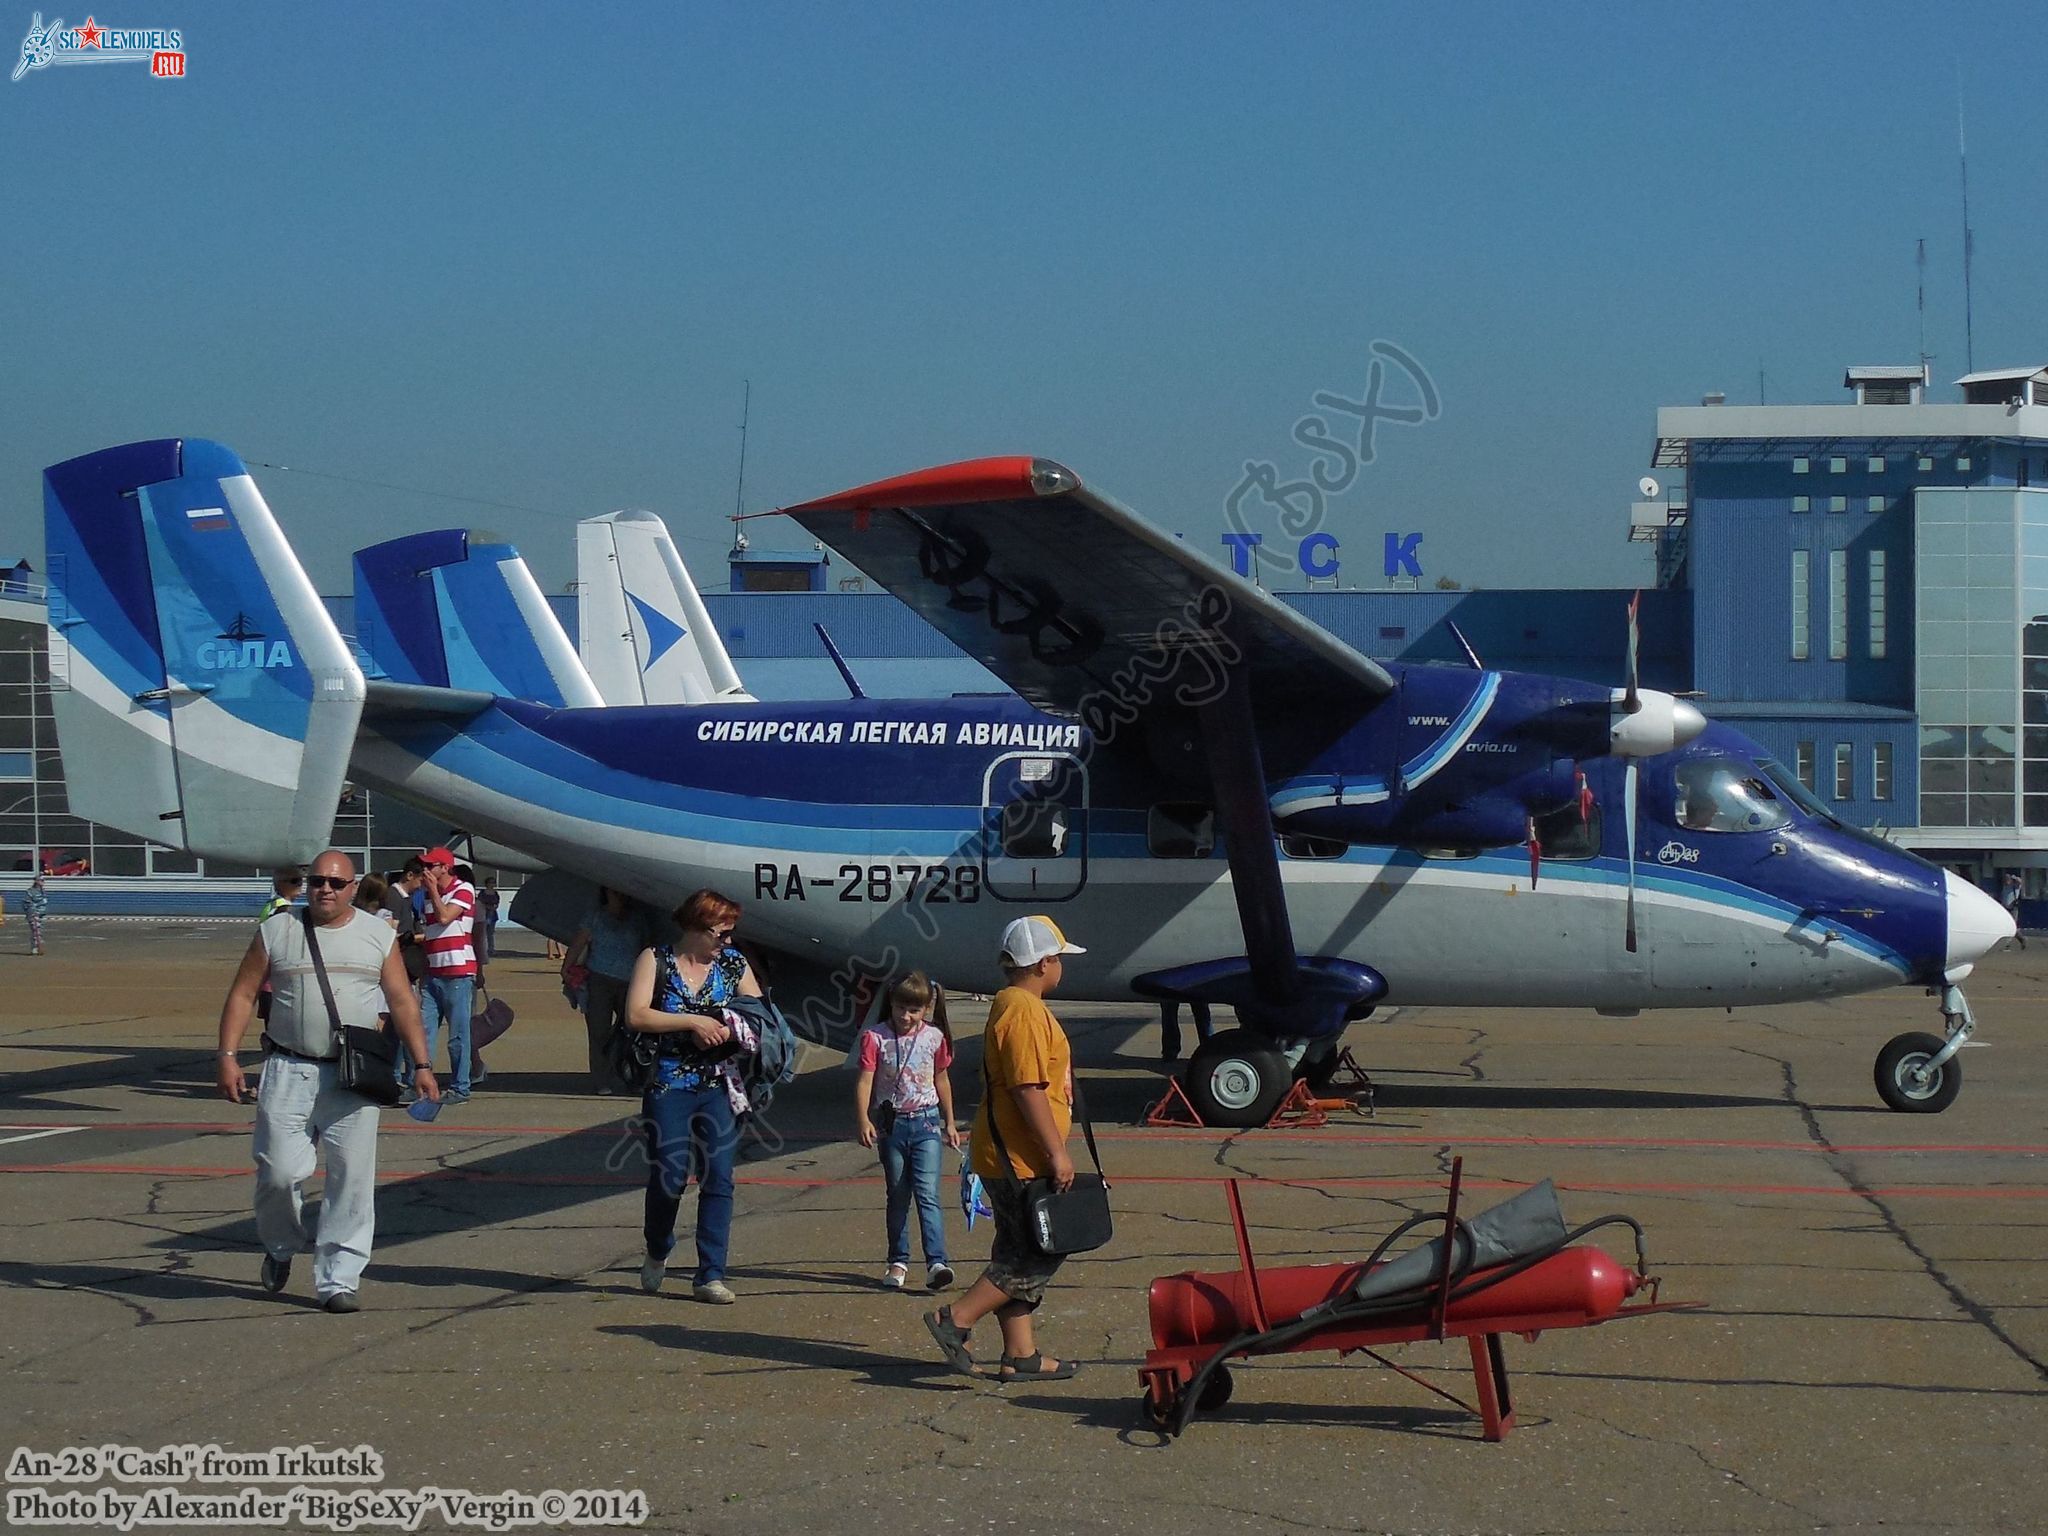 An-28 (RA-28728)_Irkutsk_009